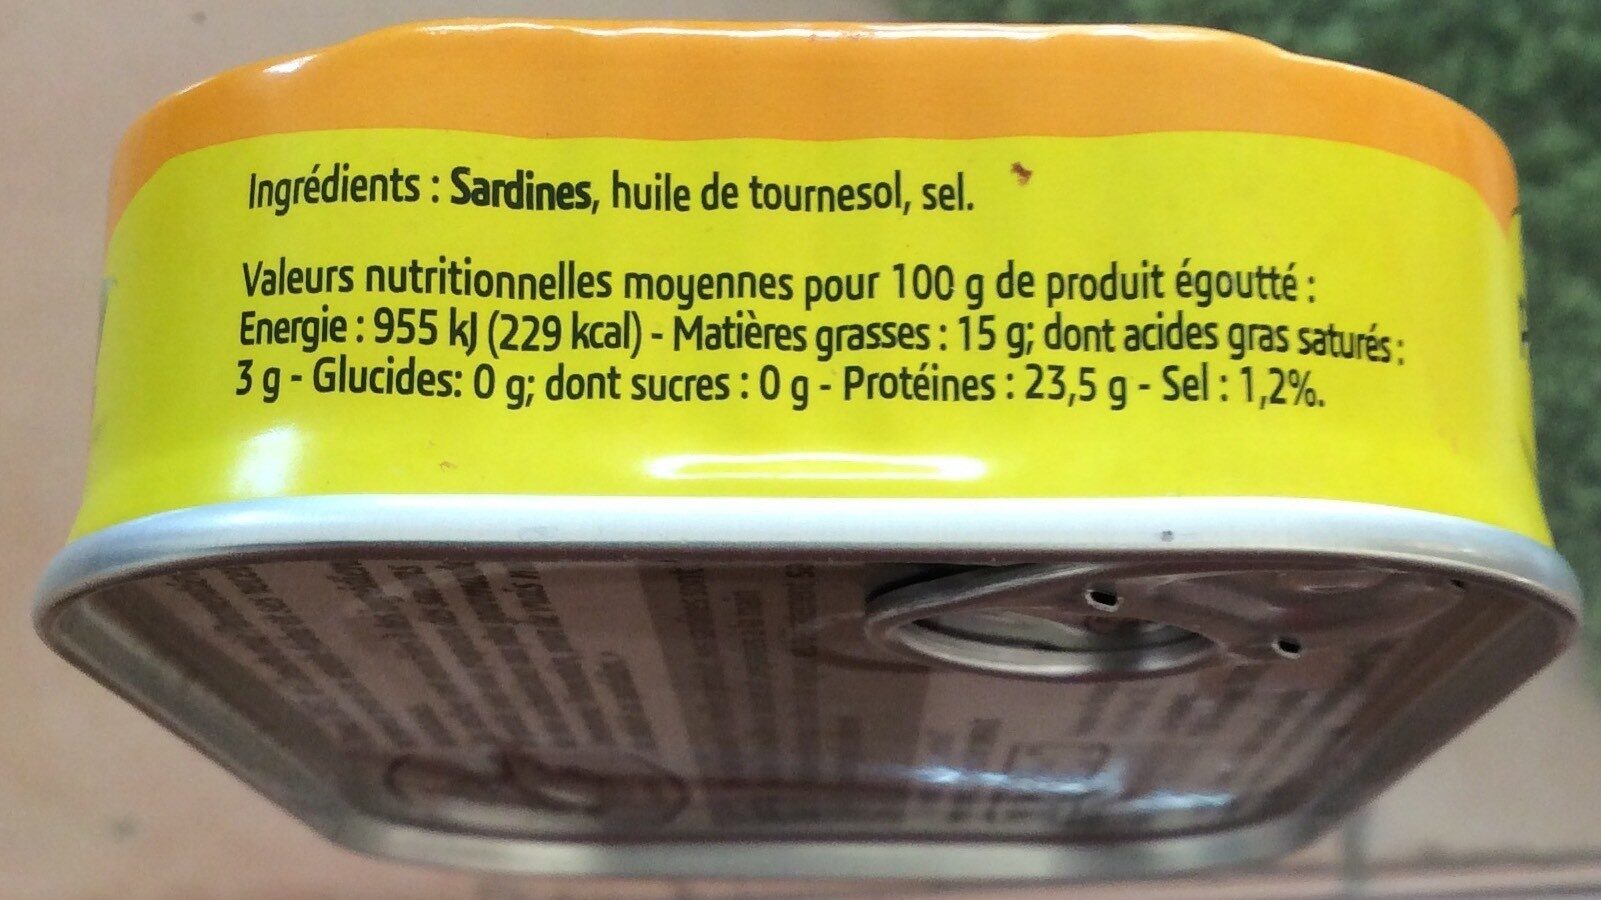 Sardines huile de tournesol - Tableau nutritionnel